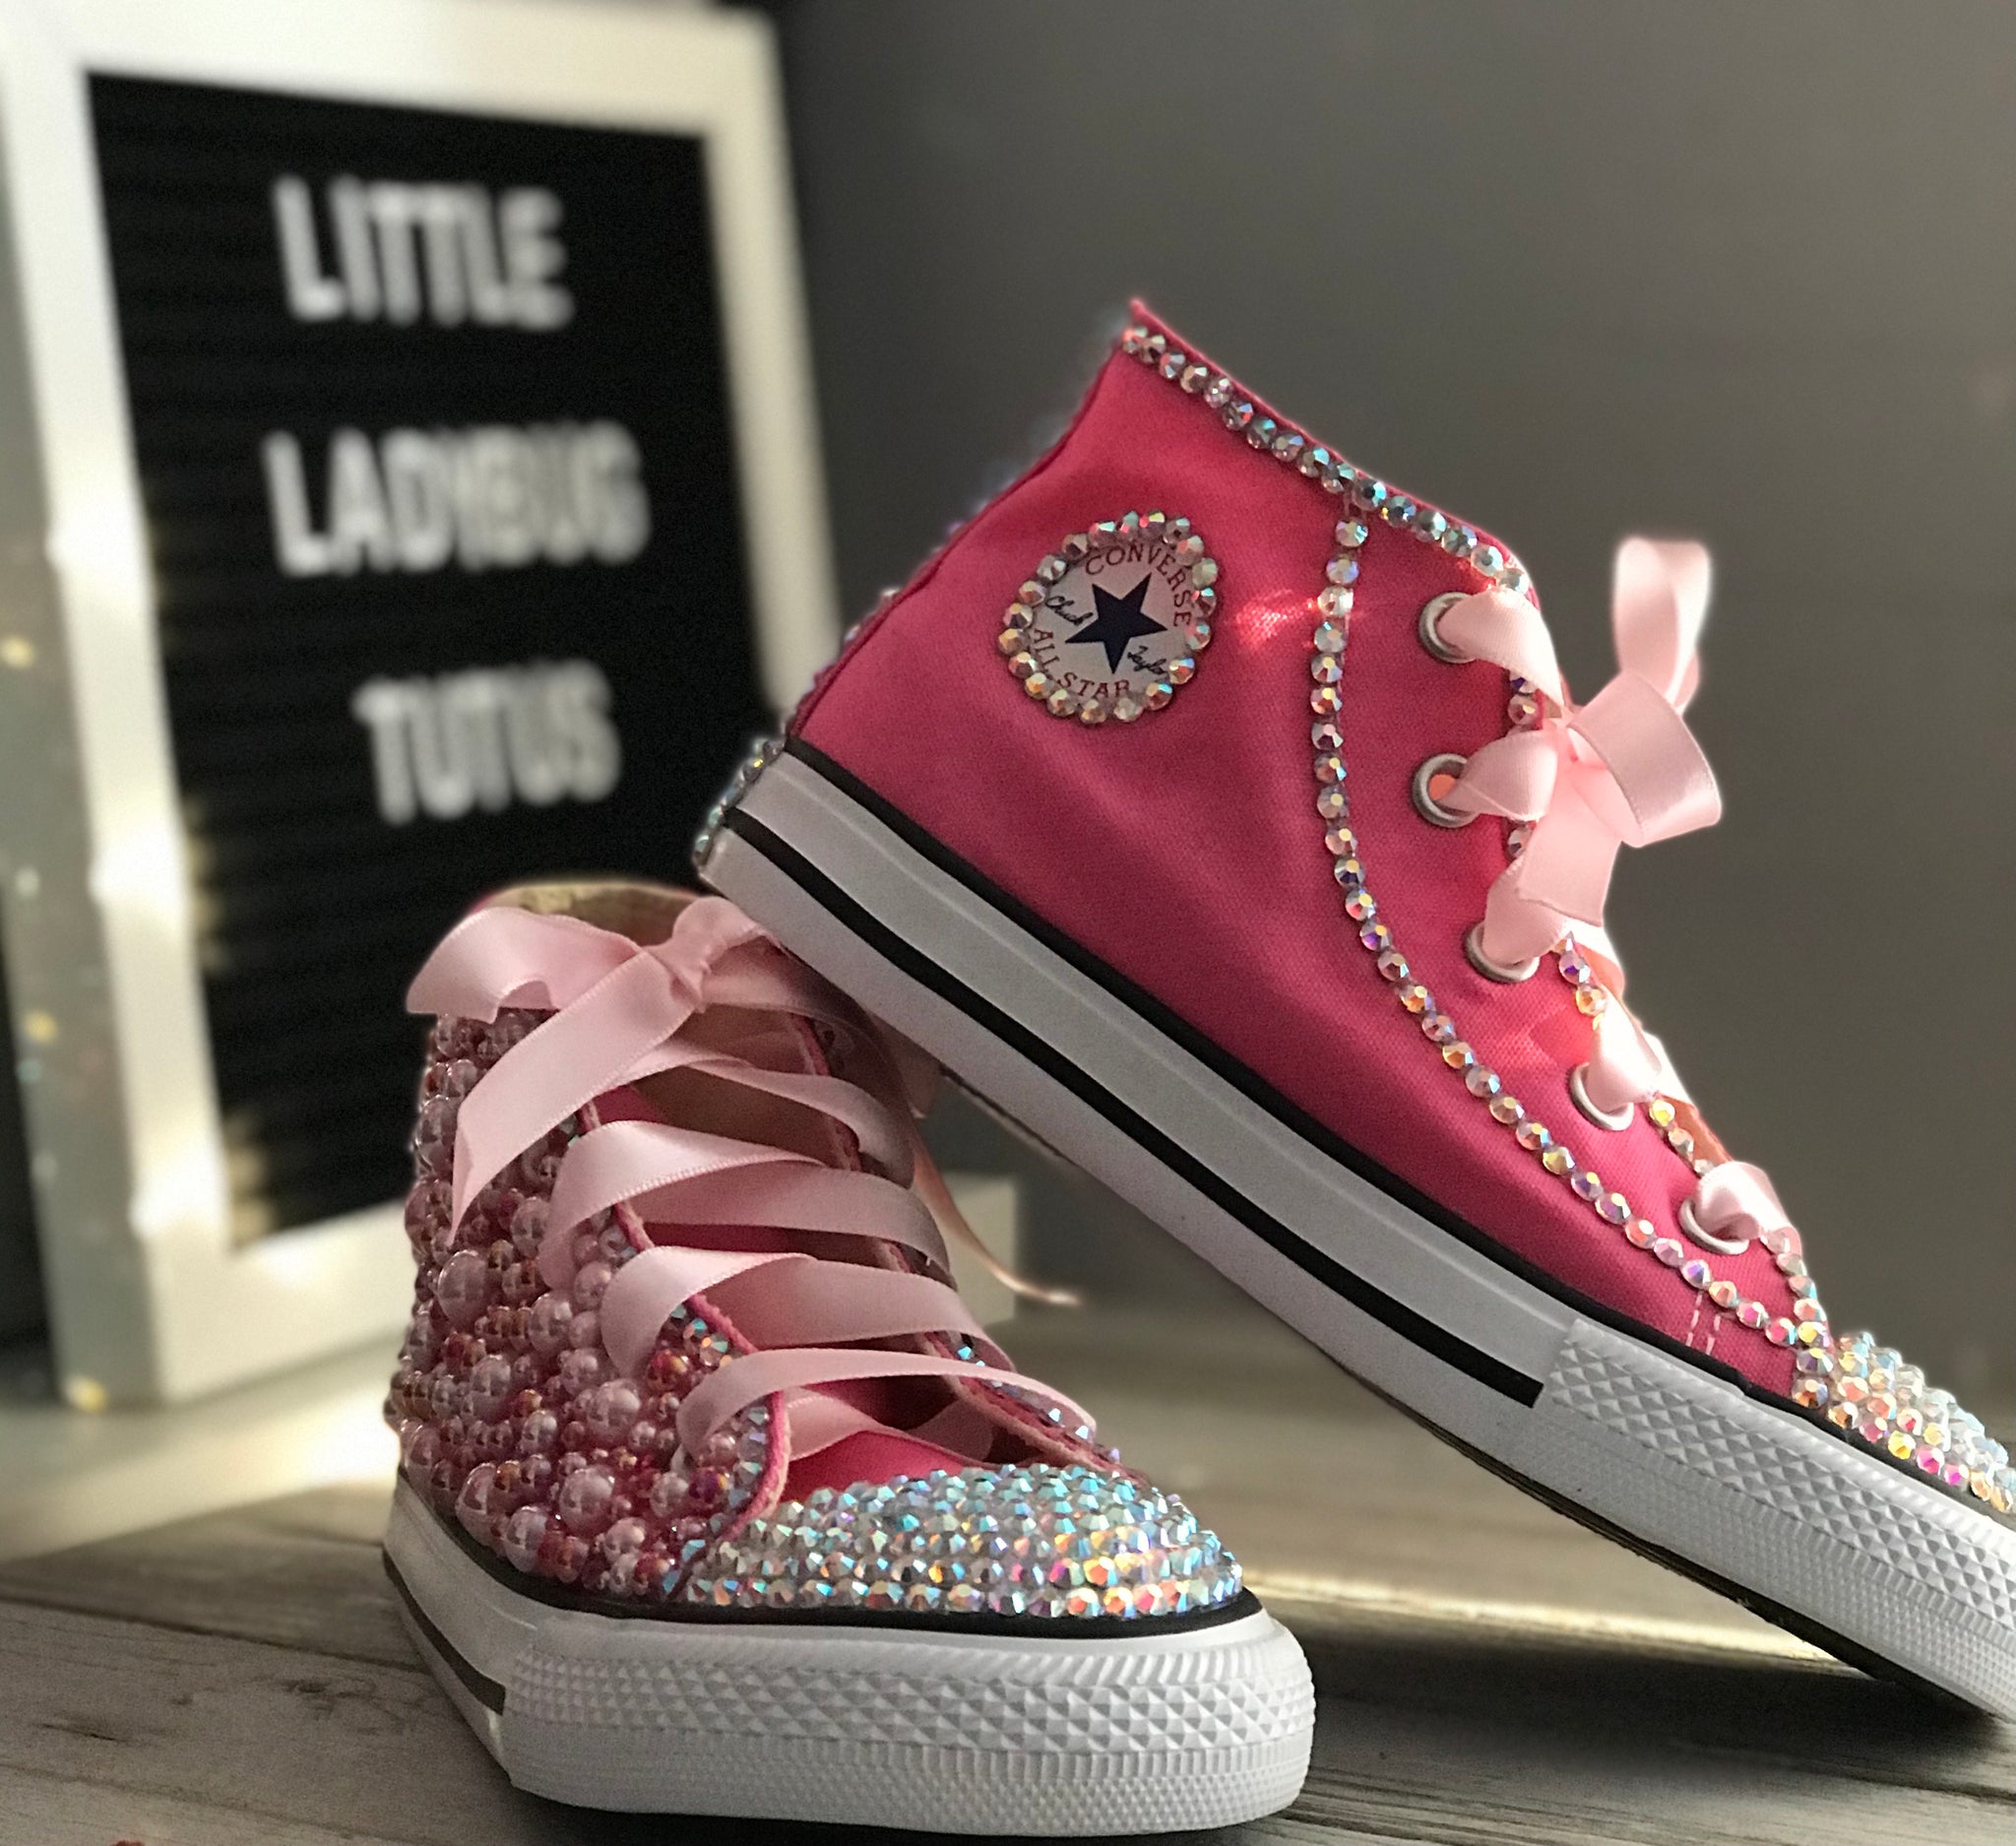 Academie satelliet Tijdig Pink Bedazzled Converse Sneakers | Little Ladybug Tutus